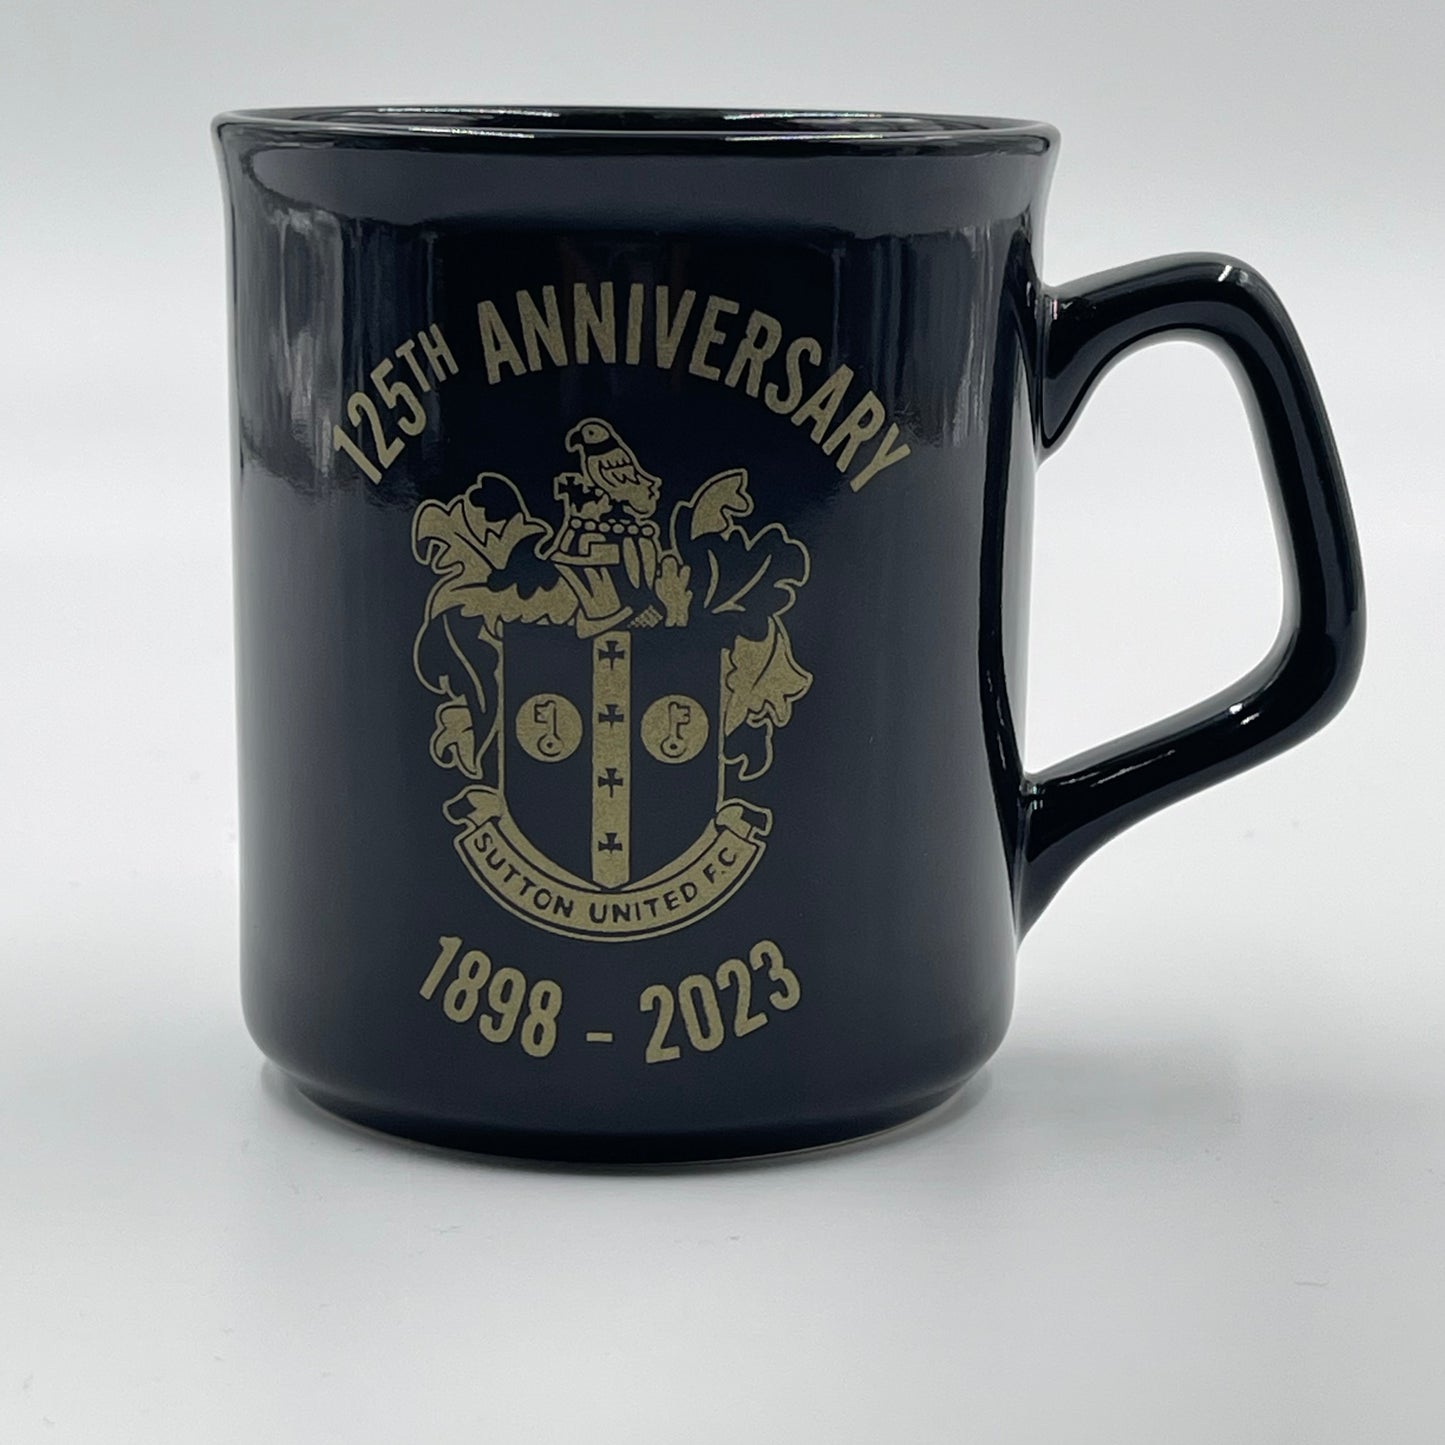 125th Anniversary Mug